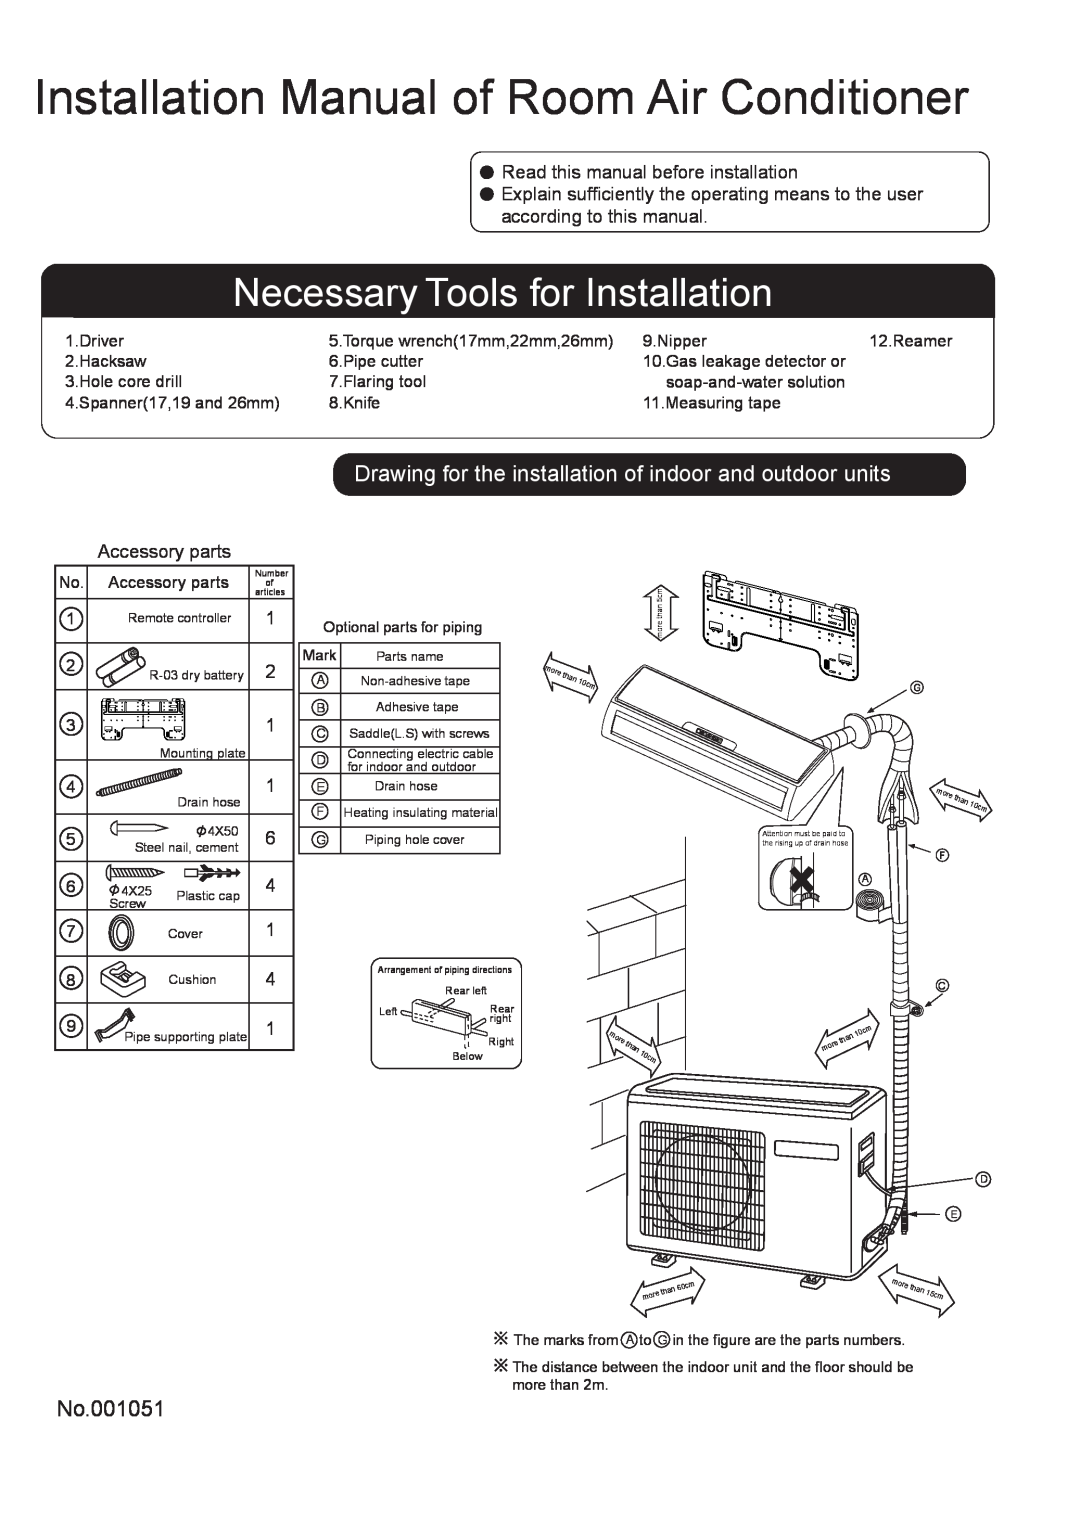 Haier HSU-18LEA13(T3) installation manual Installation Manual of Room Air Conditioner, Necessary Tools for Installation 